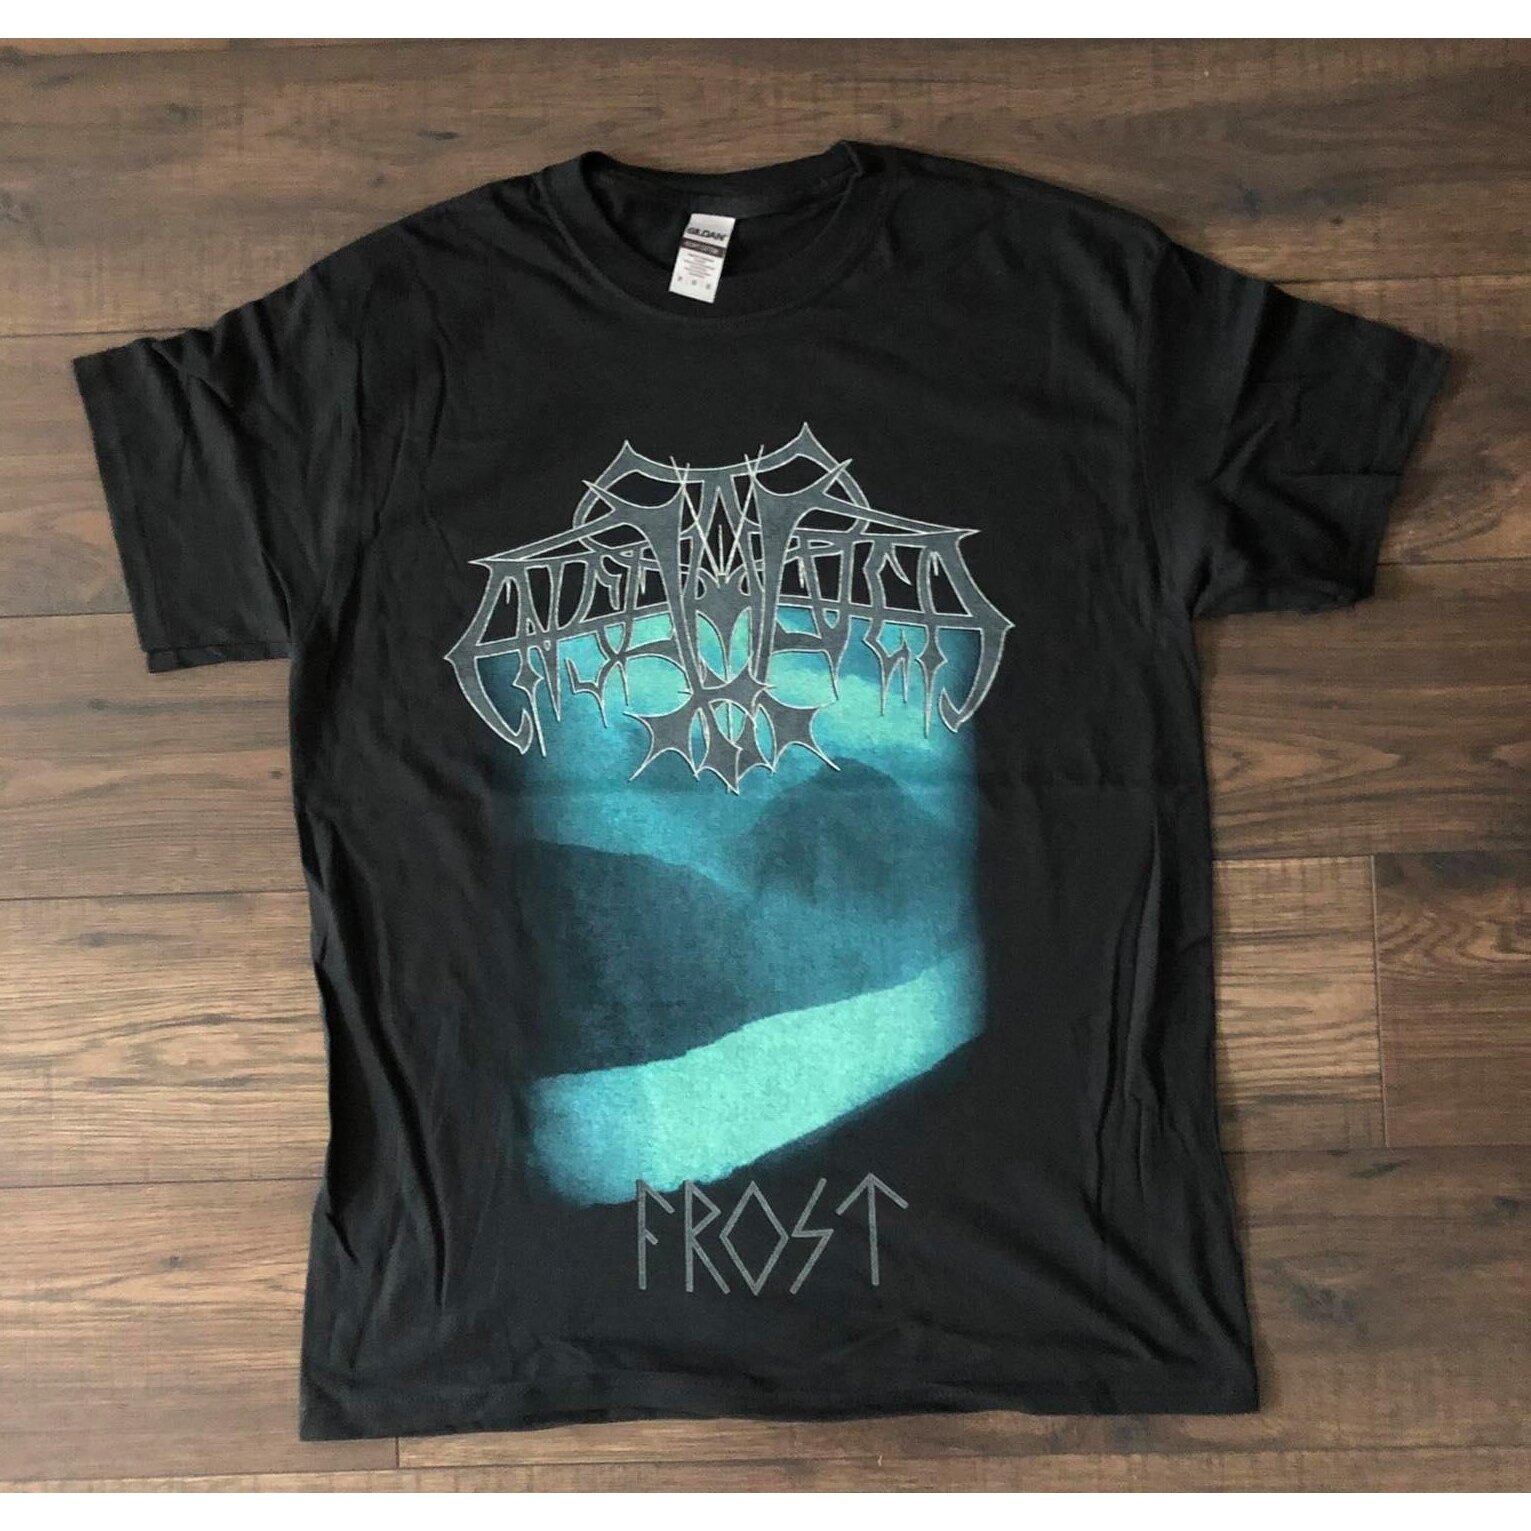 XL Enslaved L XXL Frost t-shirt XS S M 